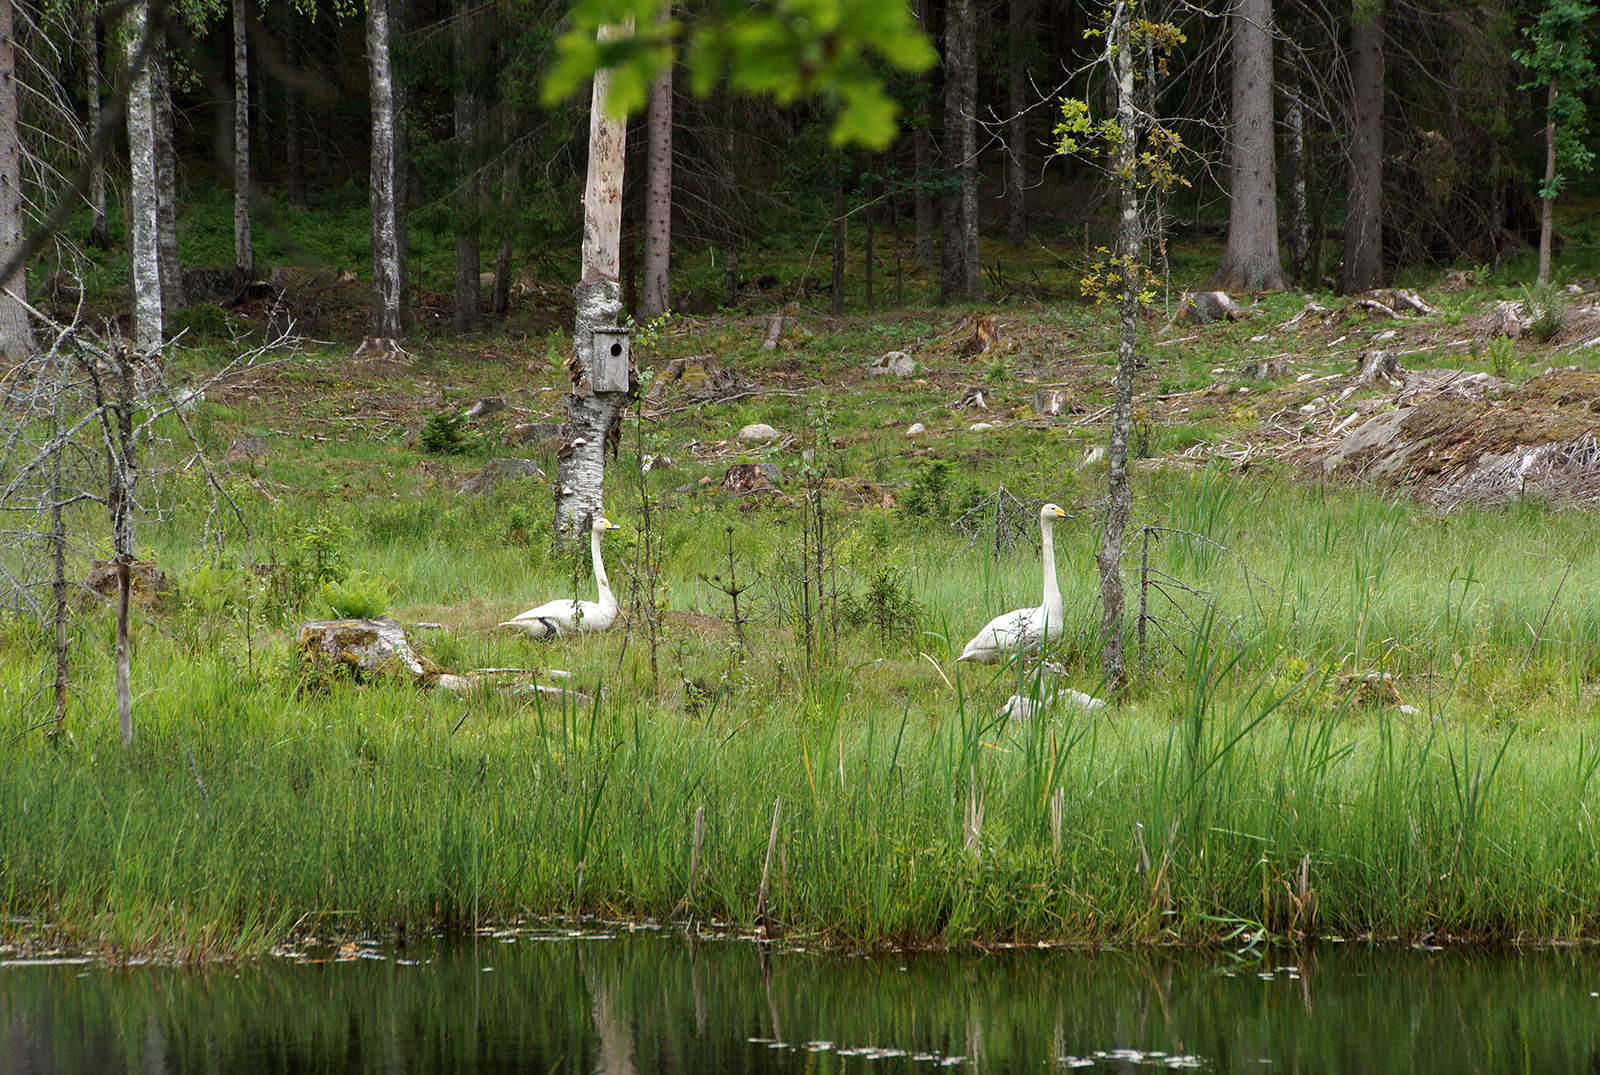 Swans enjoy a wetland site established on the estate. Photo: Maria Munck-Pihlgren